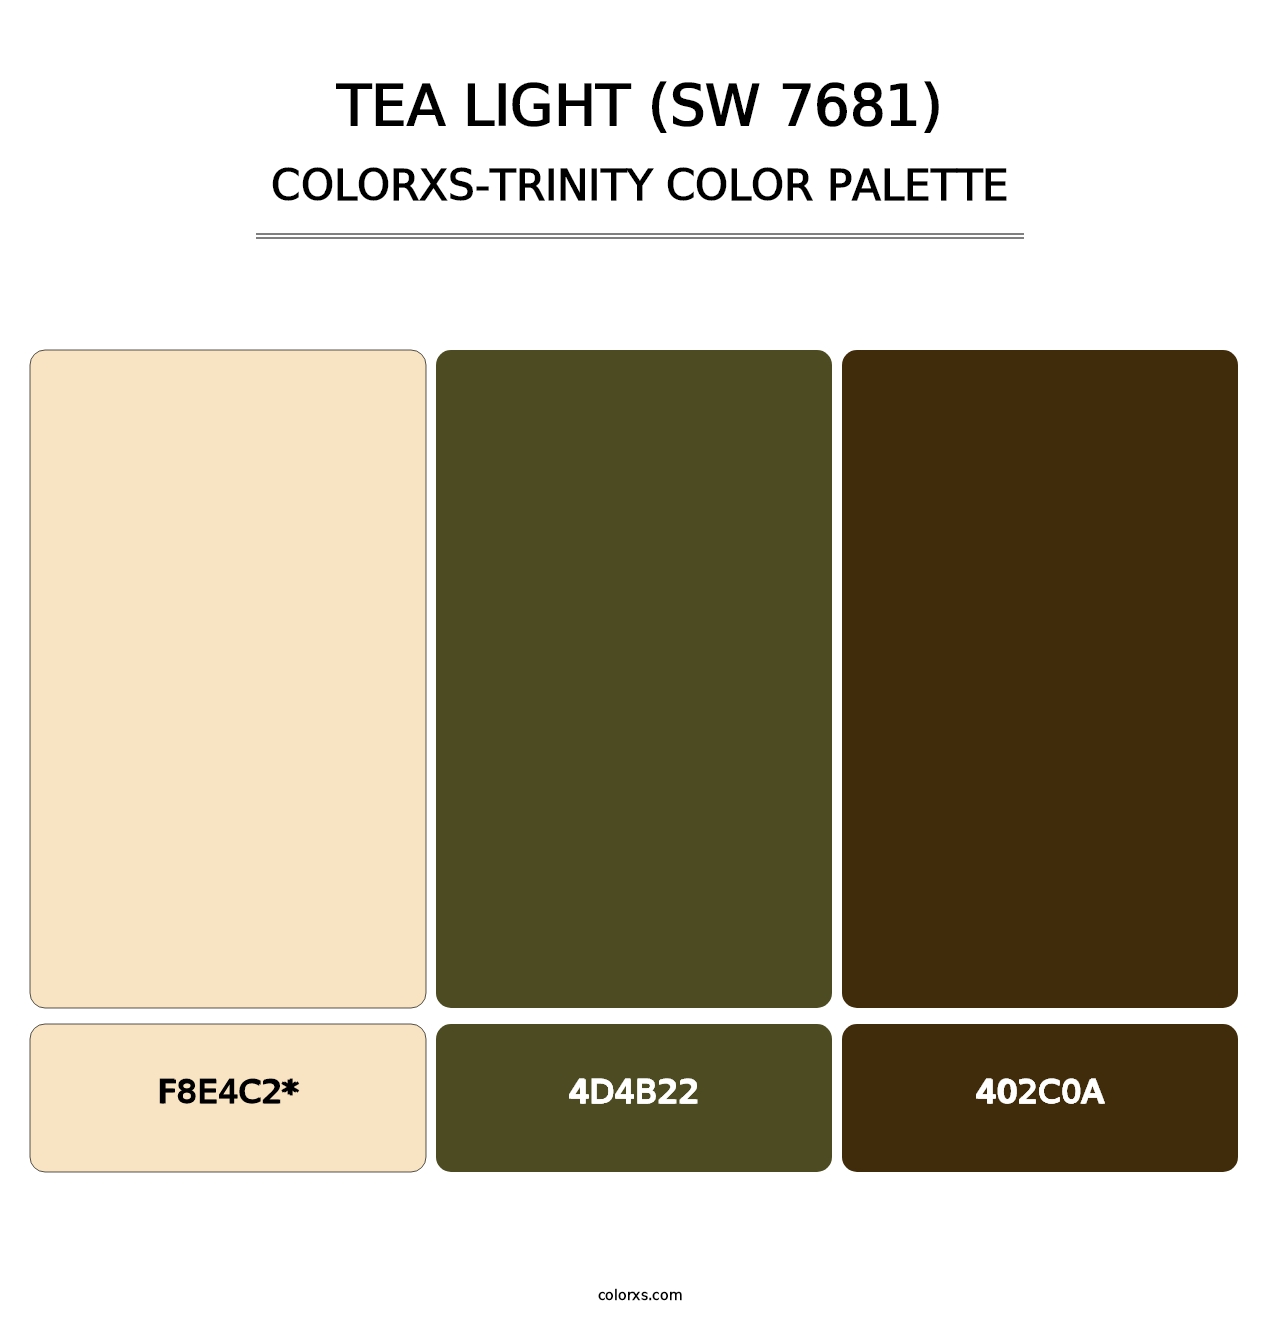 Tea Light (SW 7681) - Colorxs Trinity Palette